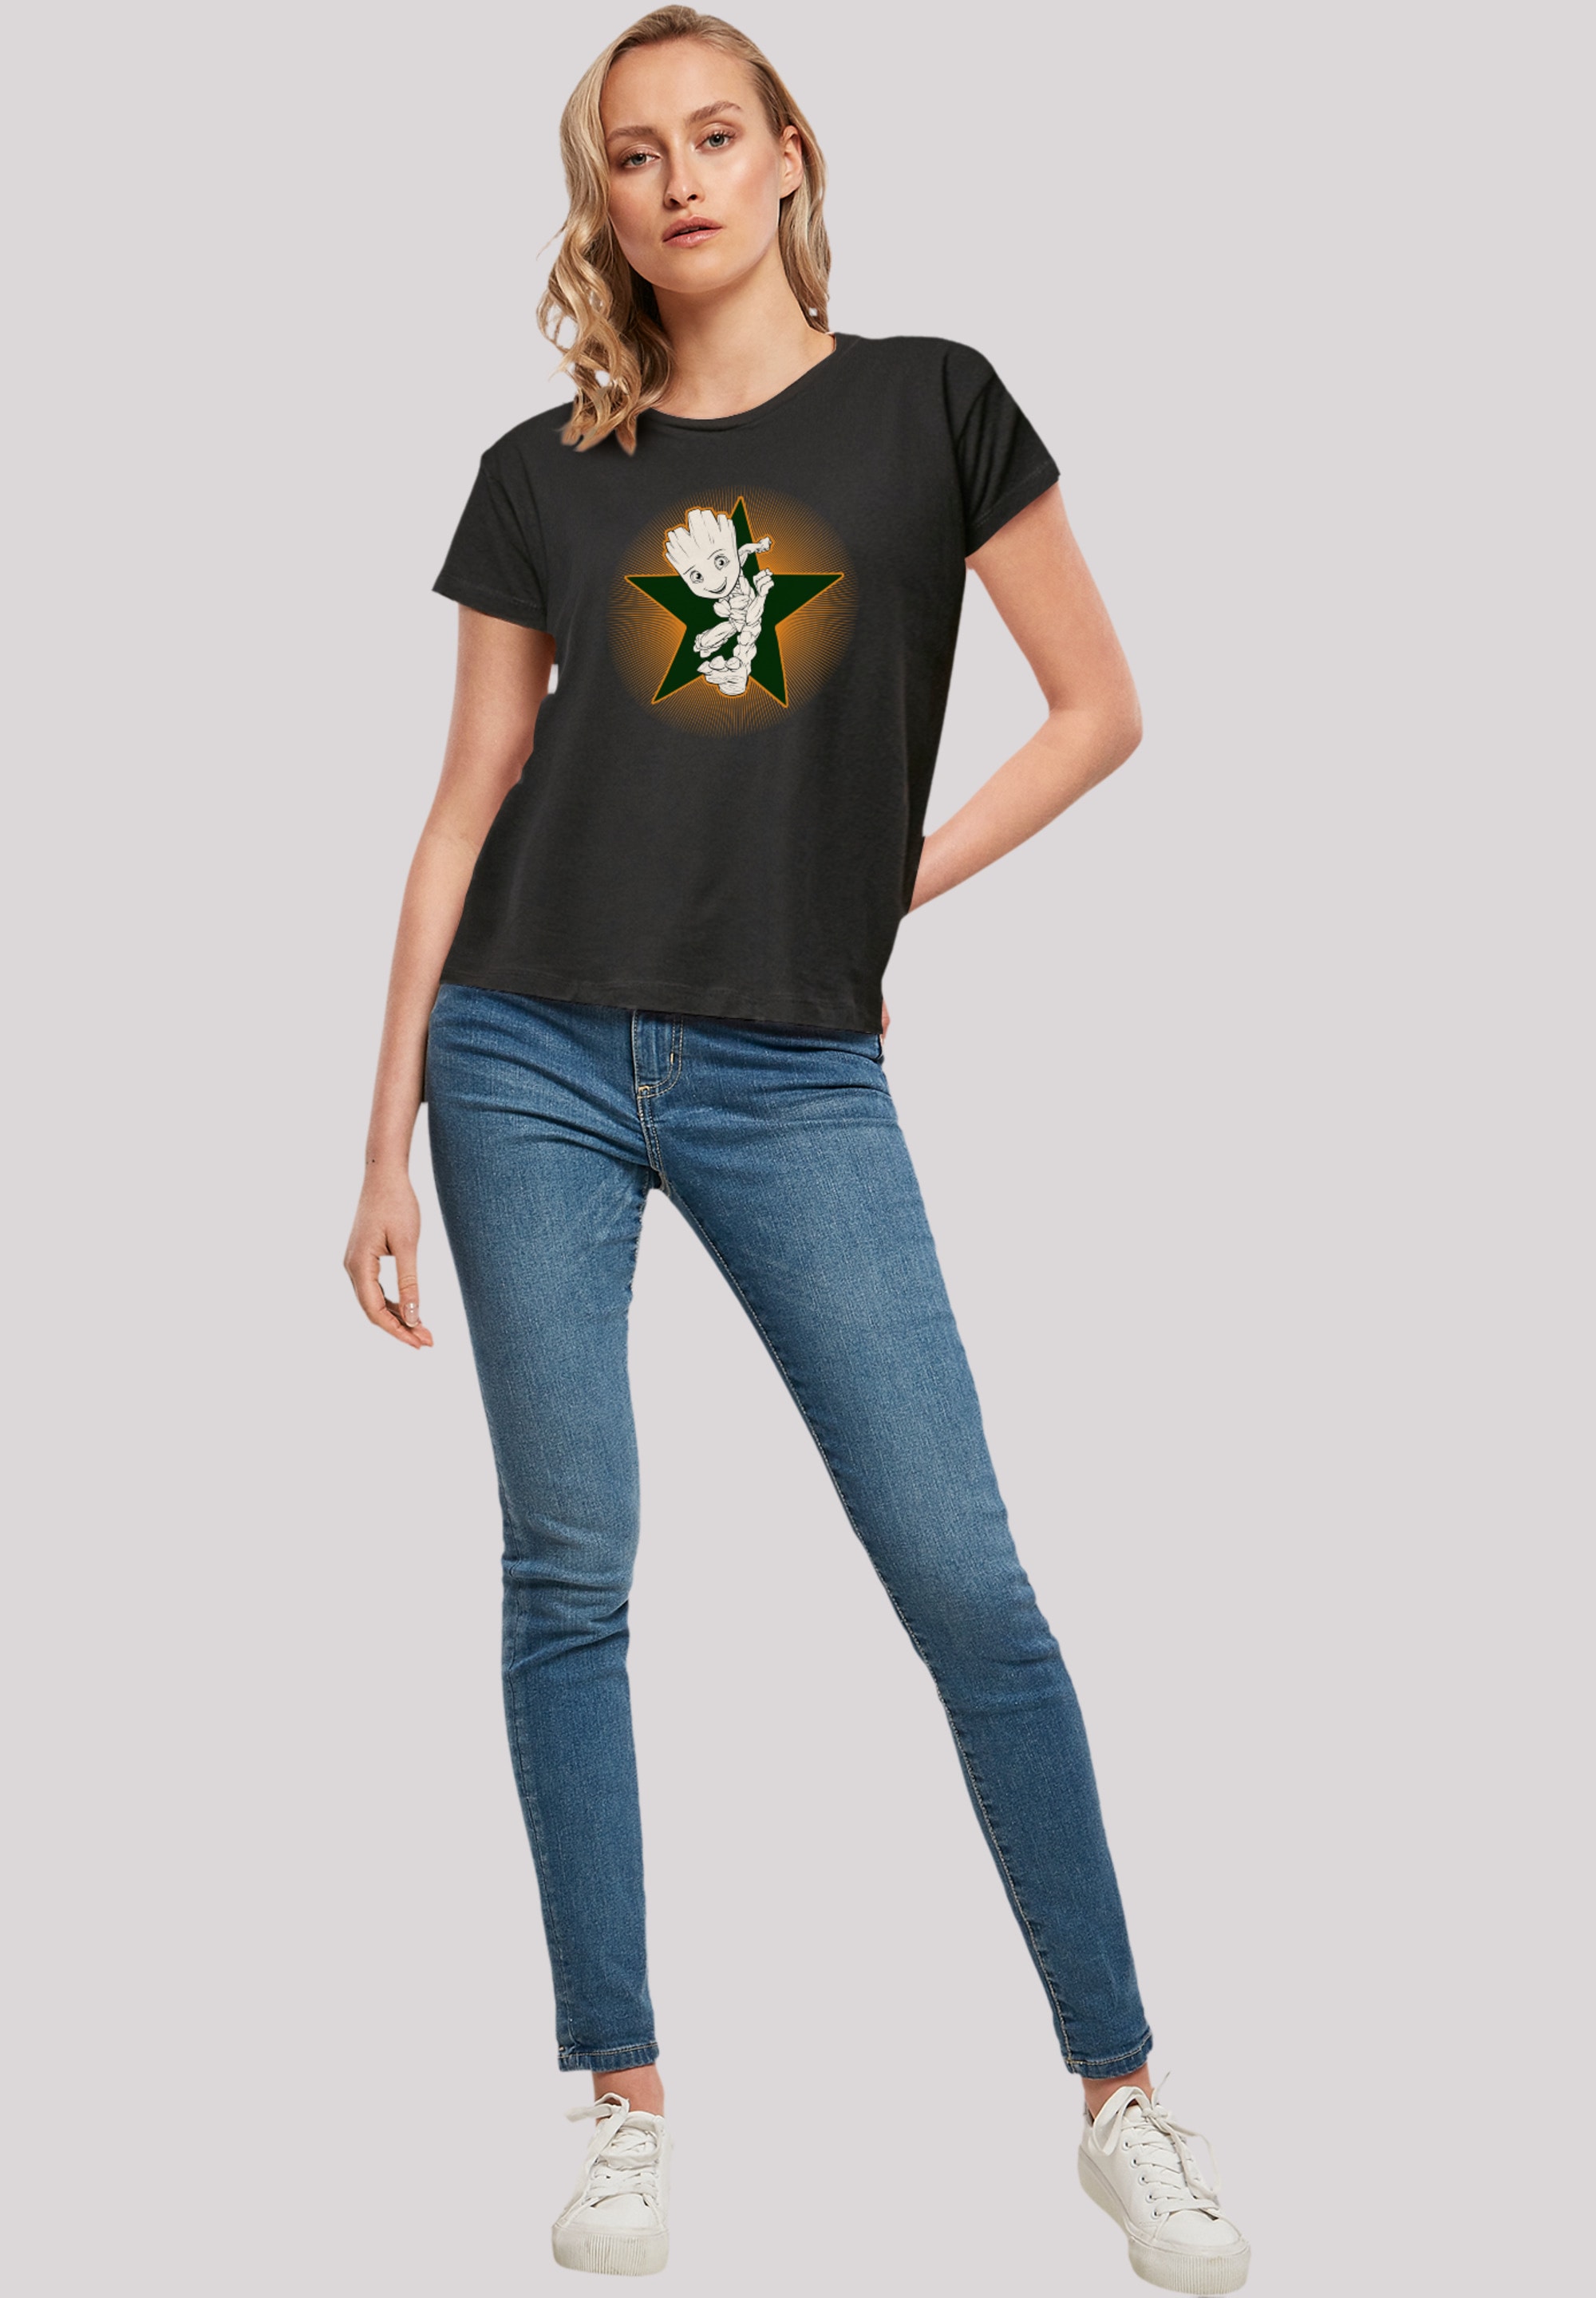 Galaxy Guardians kaufen »Marvel | Premium online Of F4NT4STIC Qualität T-Shirt The Groot Star«, BAUR